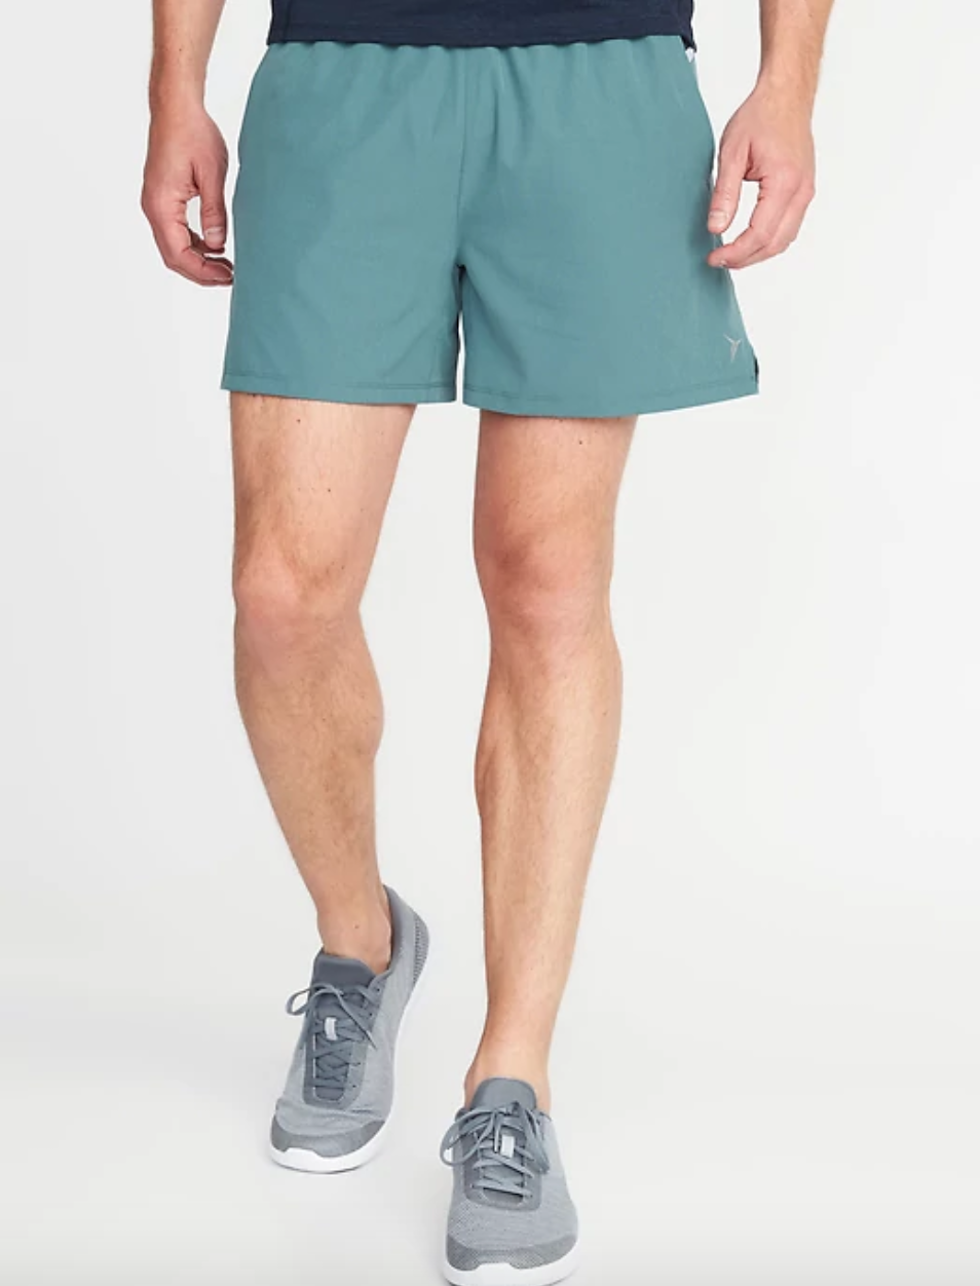 Old Navy Go-Dry Stretch Run Shorts for Men